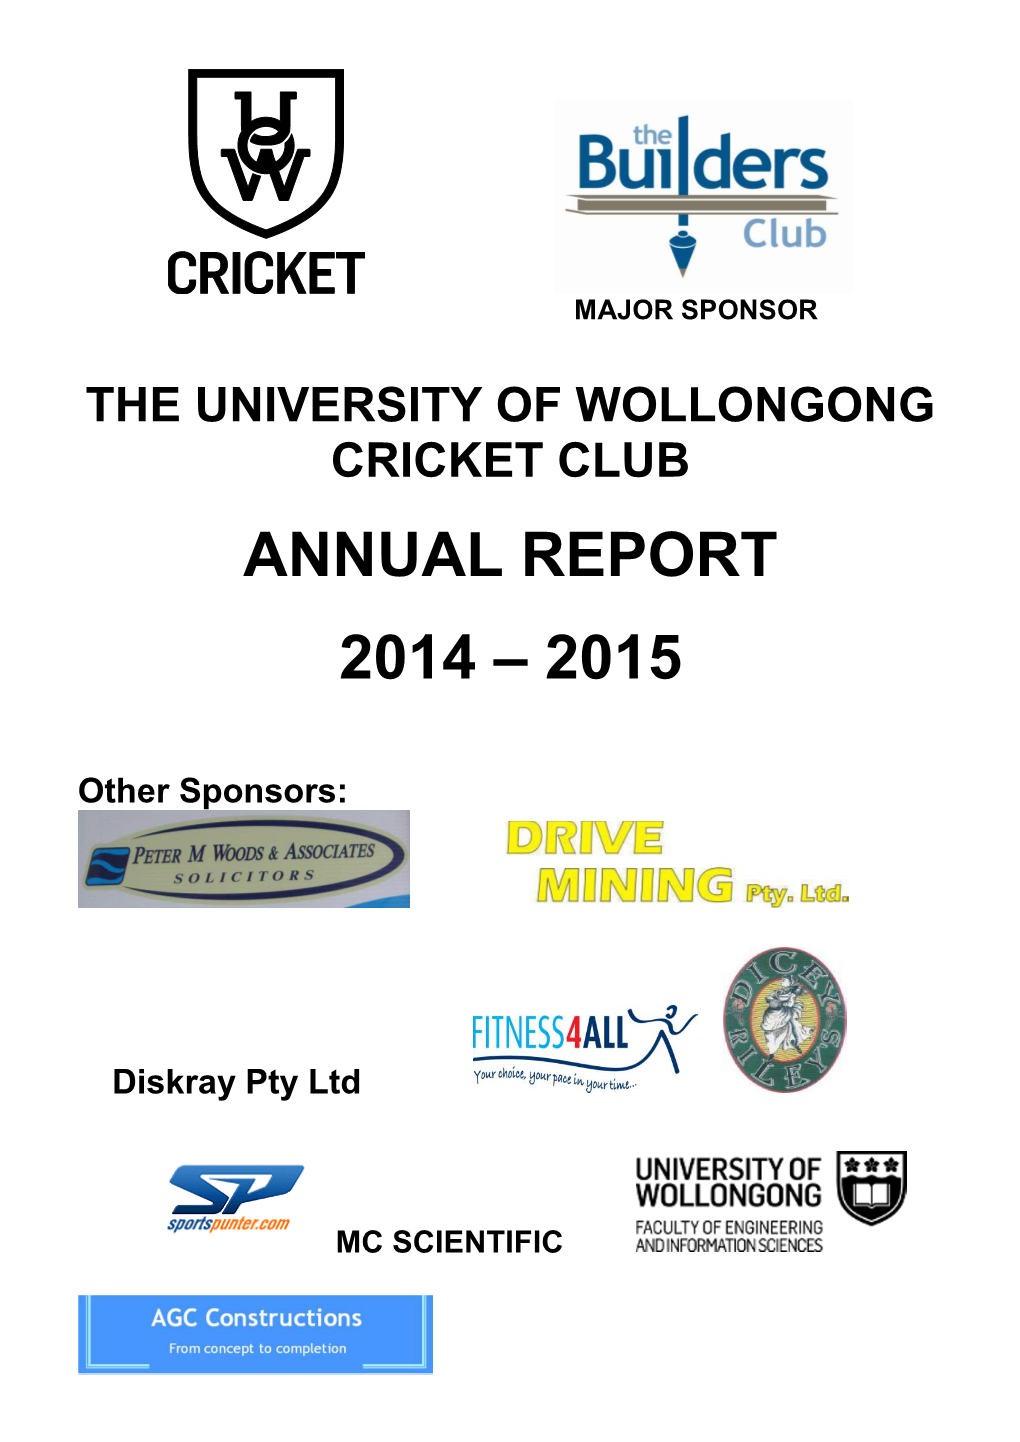 The University of Wollongong Cricket Club